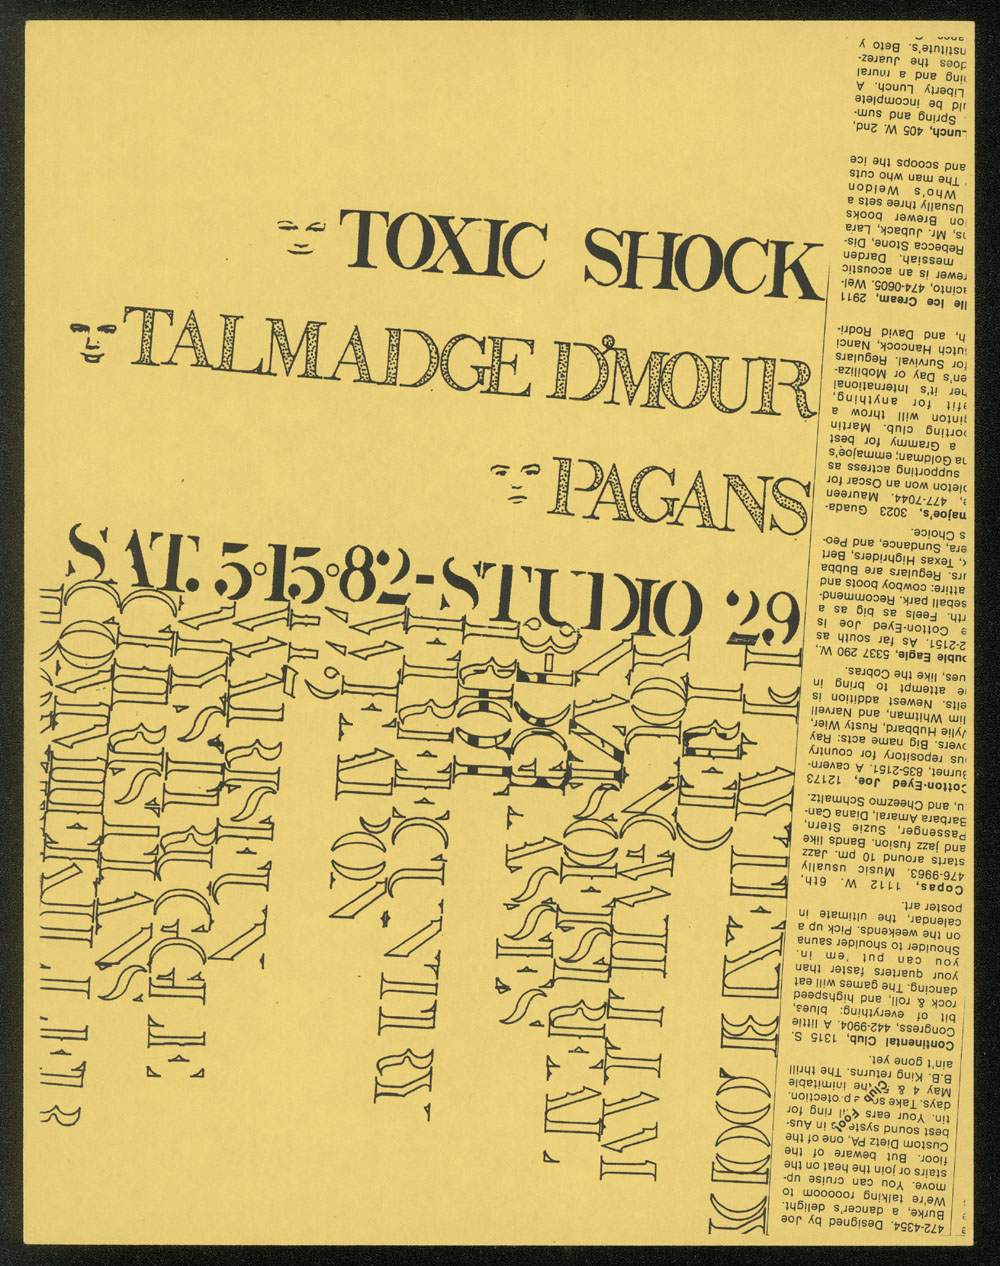 TOXIC SHOCK w/ Talmadge D'Mour, Pagans at Studio 29